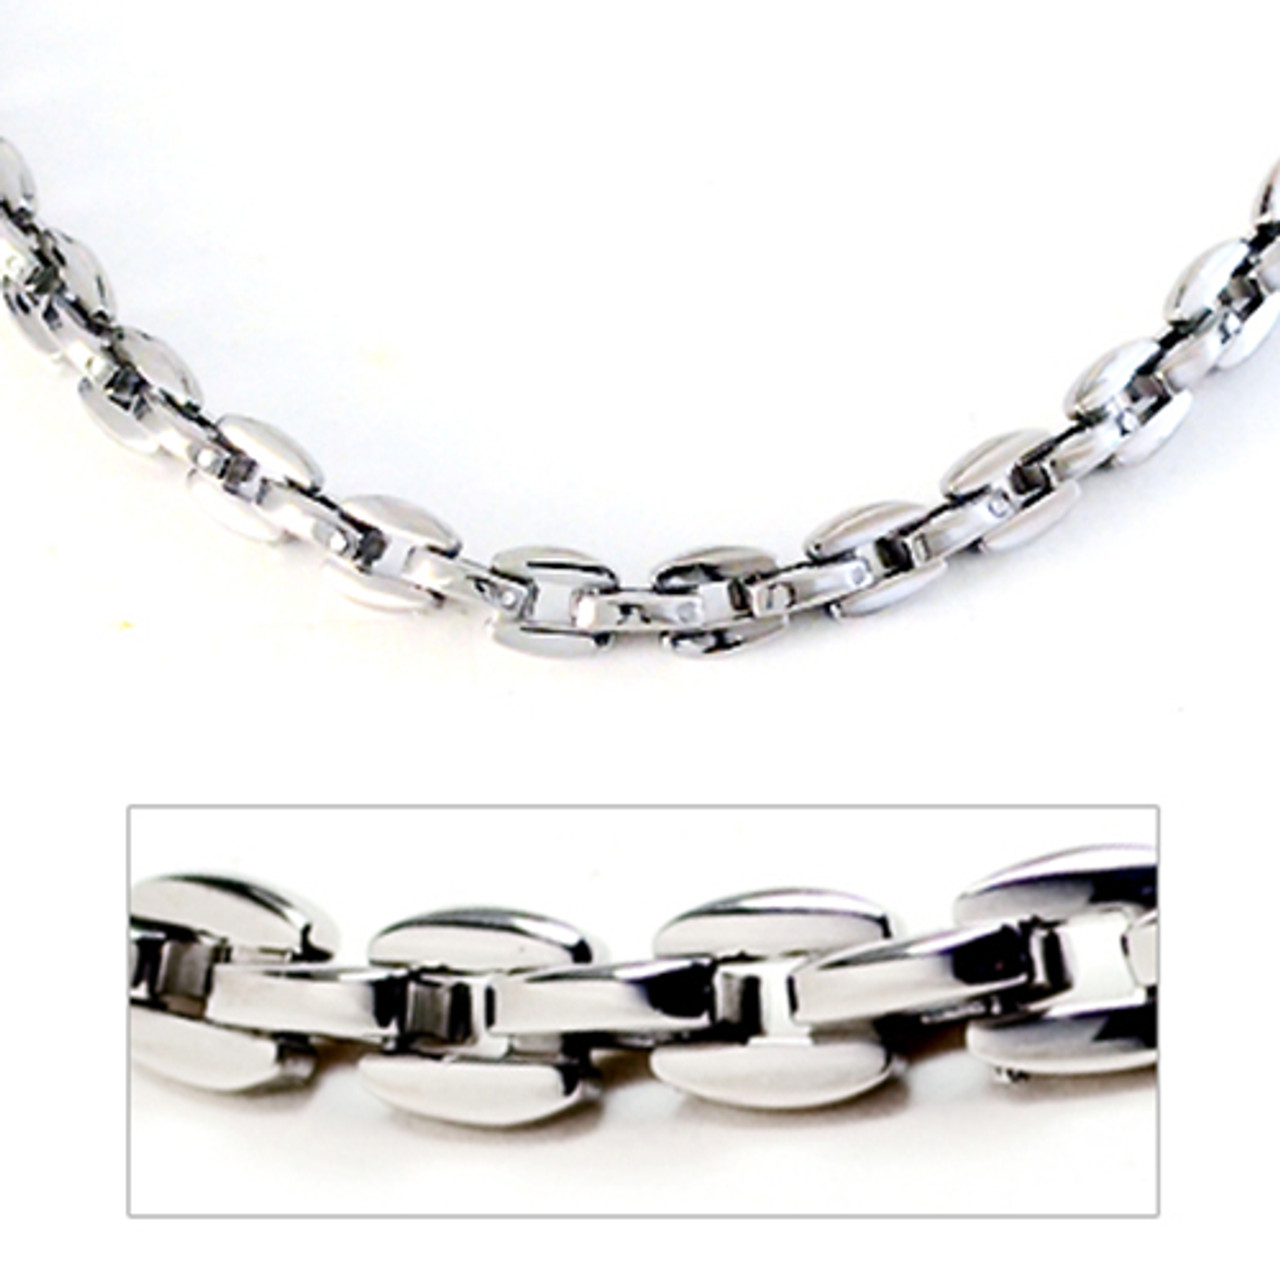 8mm X 55cm Black Stainless Steel Titanium Necklace Chain Necklace Men Wear  : Amazon.ae: Fashion